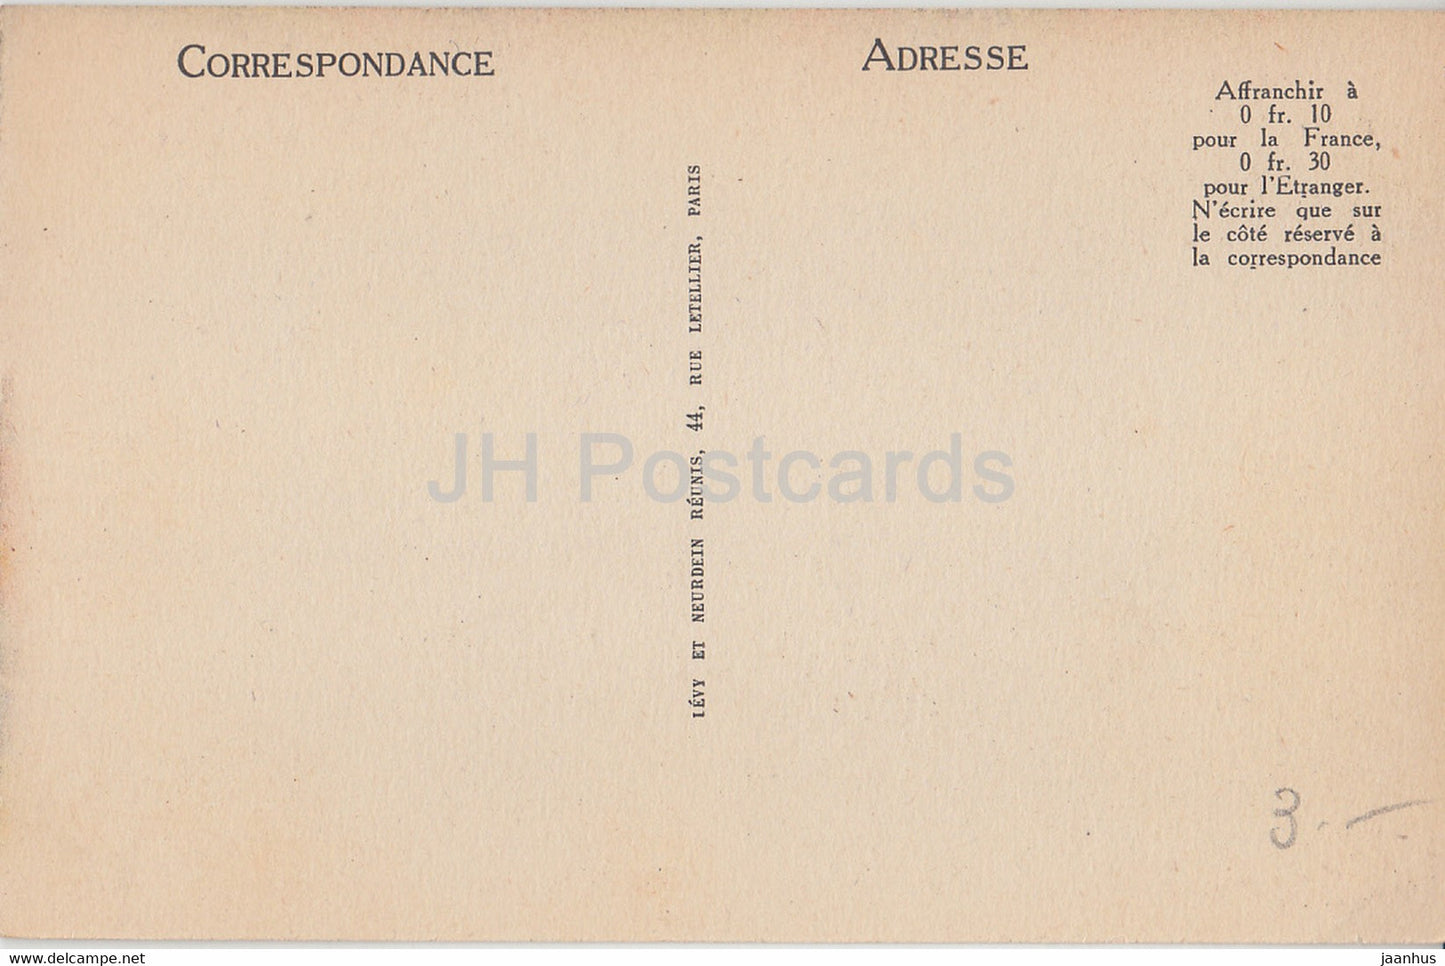 Constantine - Vue Generale prise du Camp des Oliviers - 203 - LL - old postcard - Algeria - unused